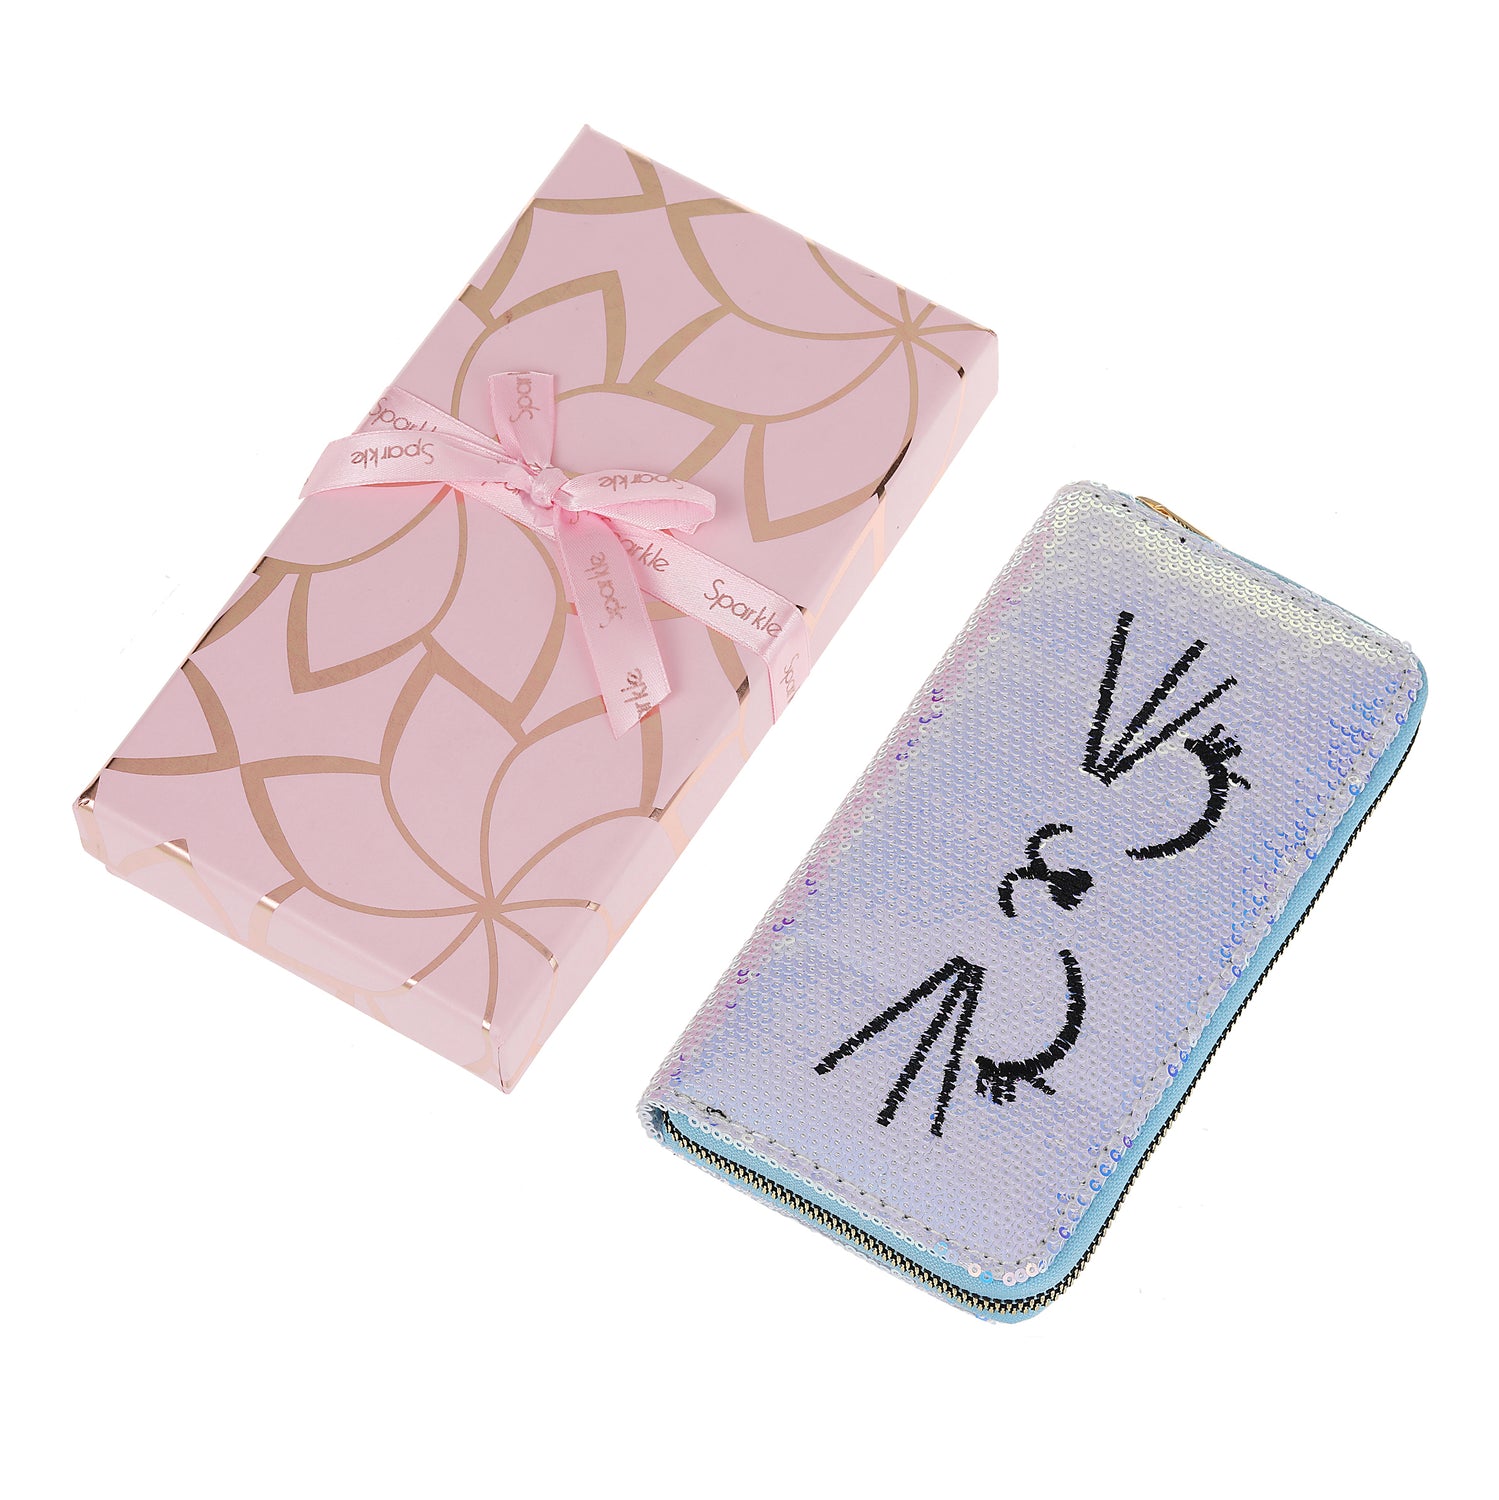 Sparkle Sequin Gift Box Wallet - White